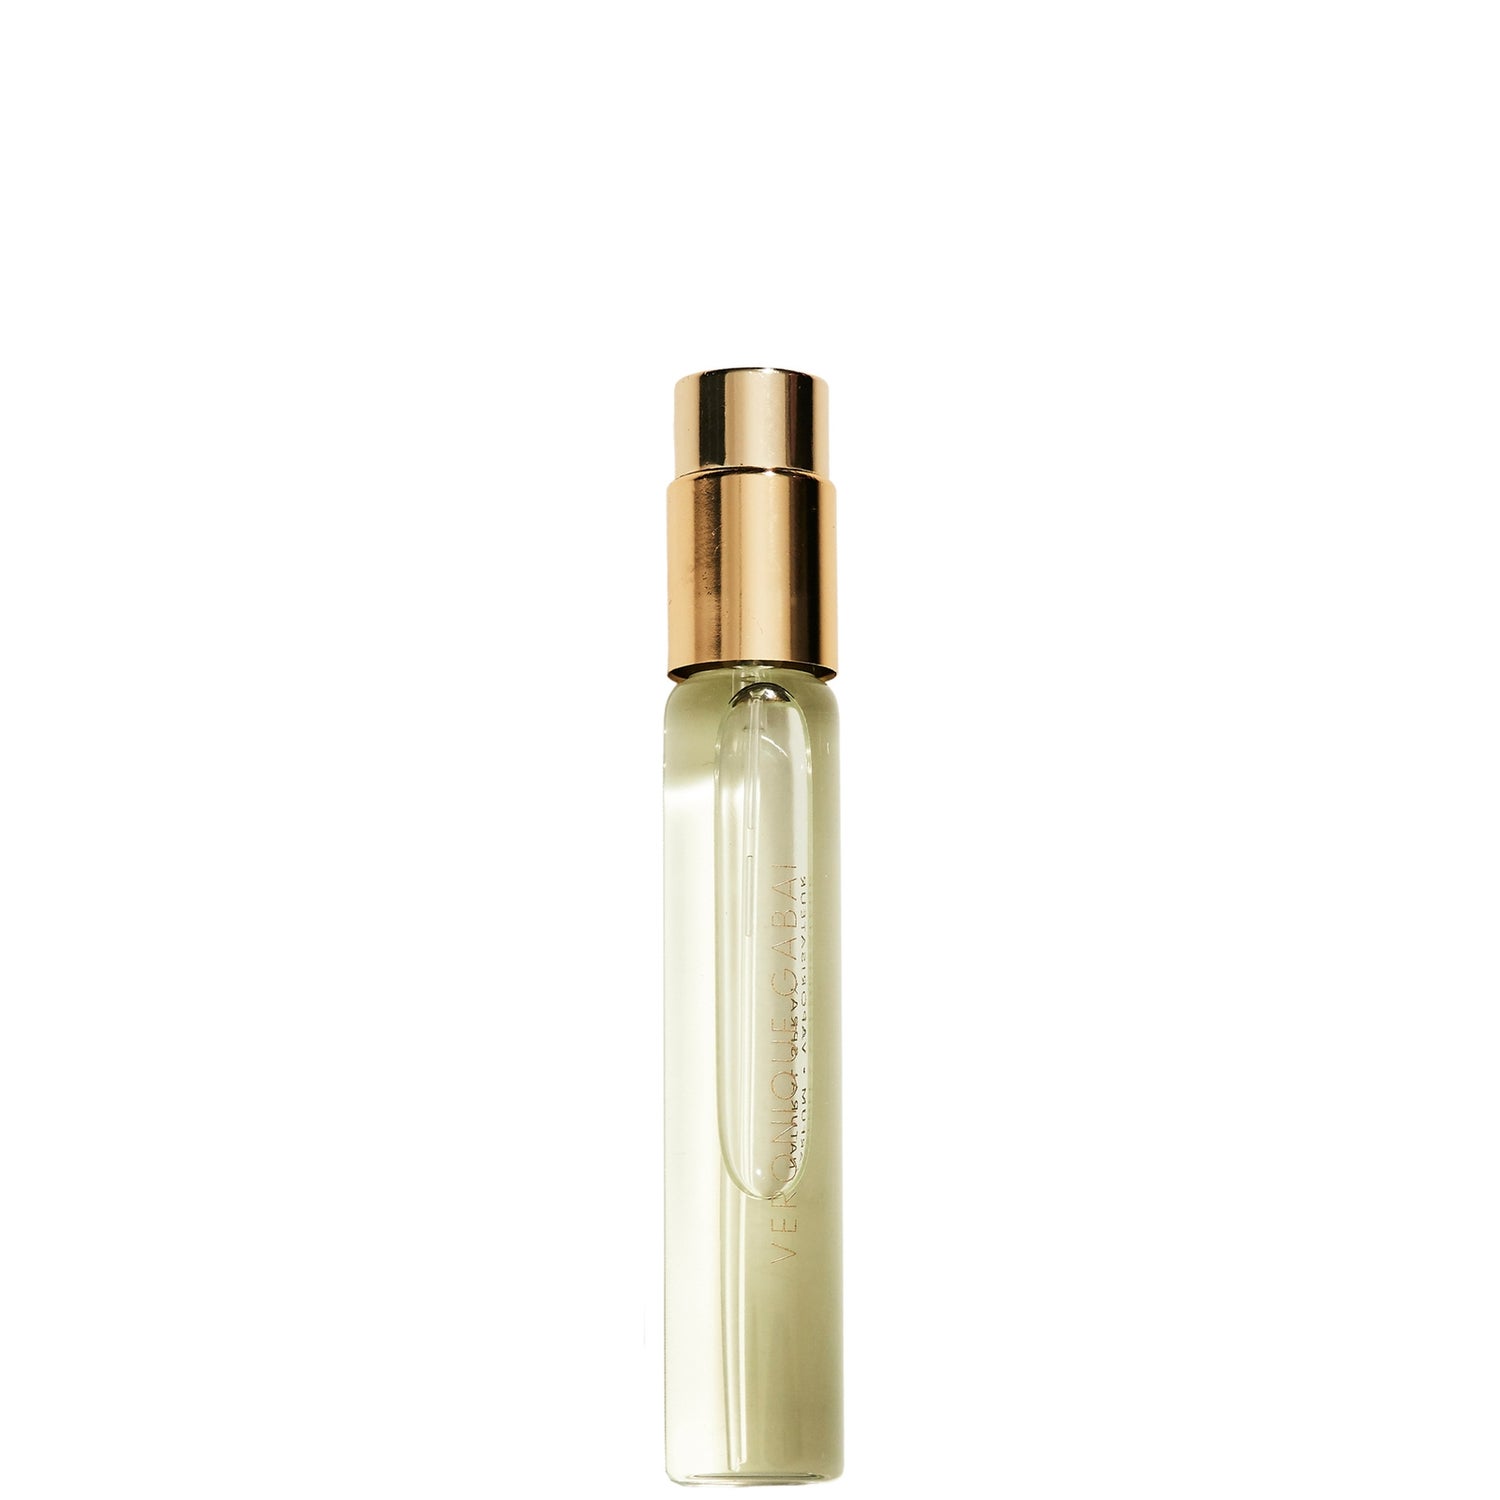 Veronique Gabai Oud Elixir Eau de Parfum 10ml